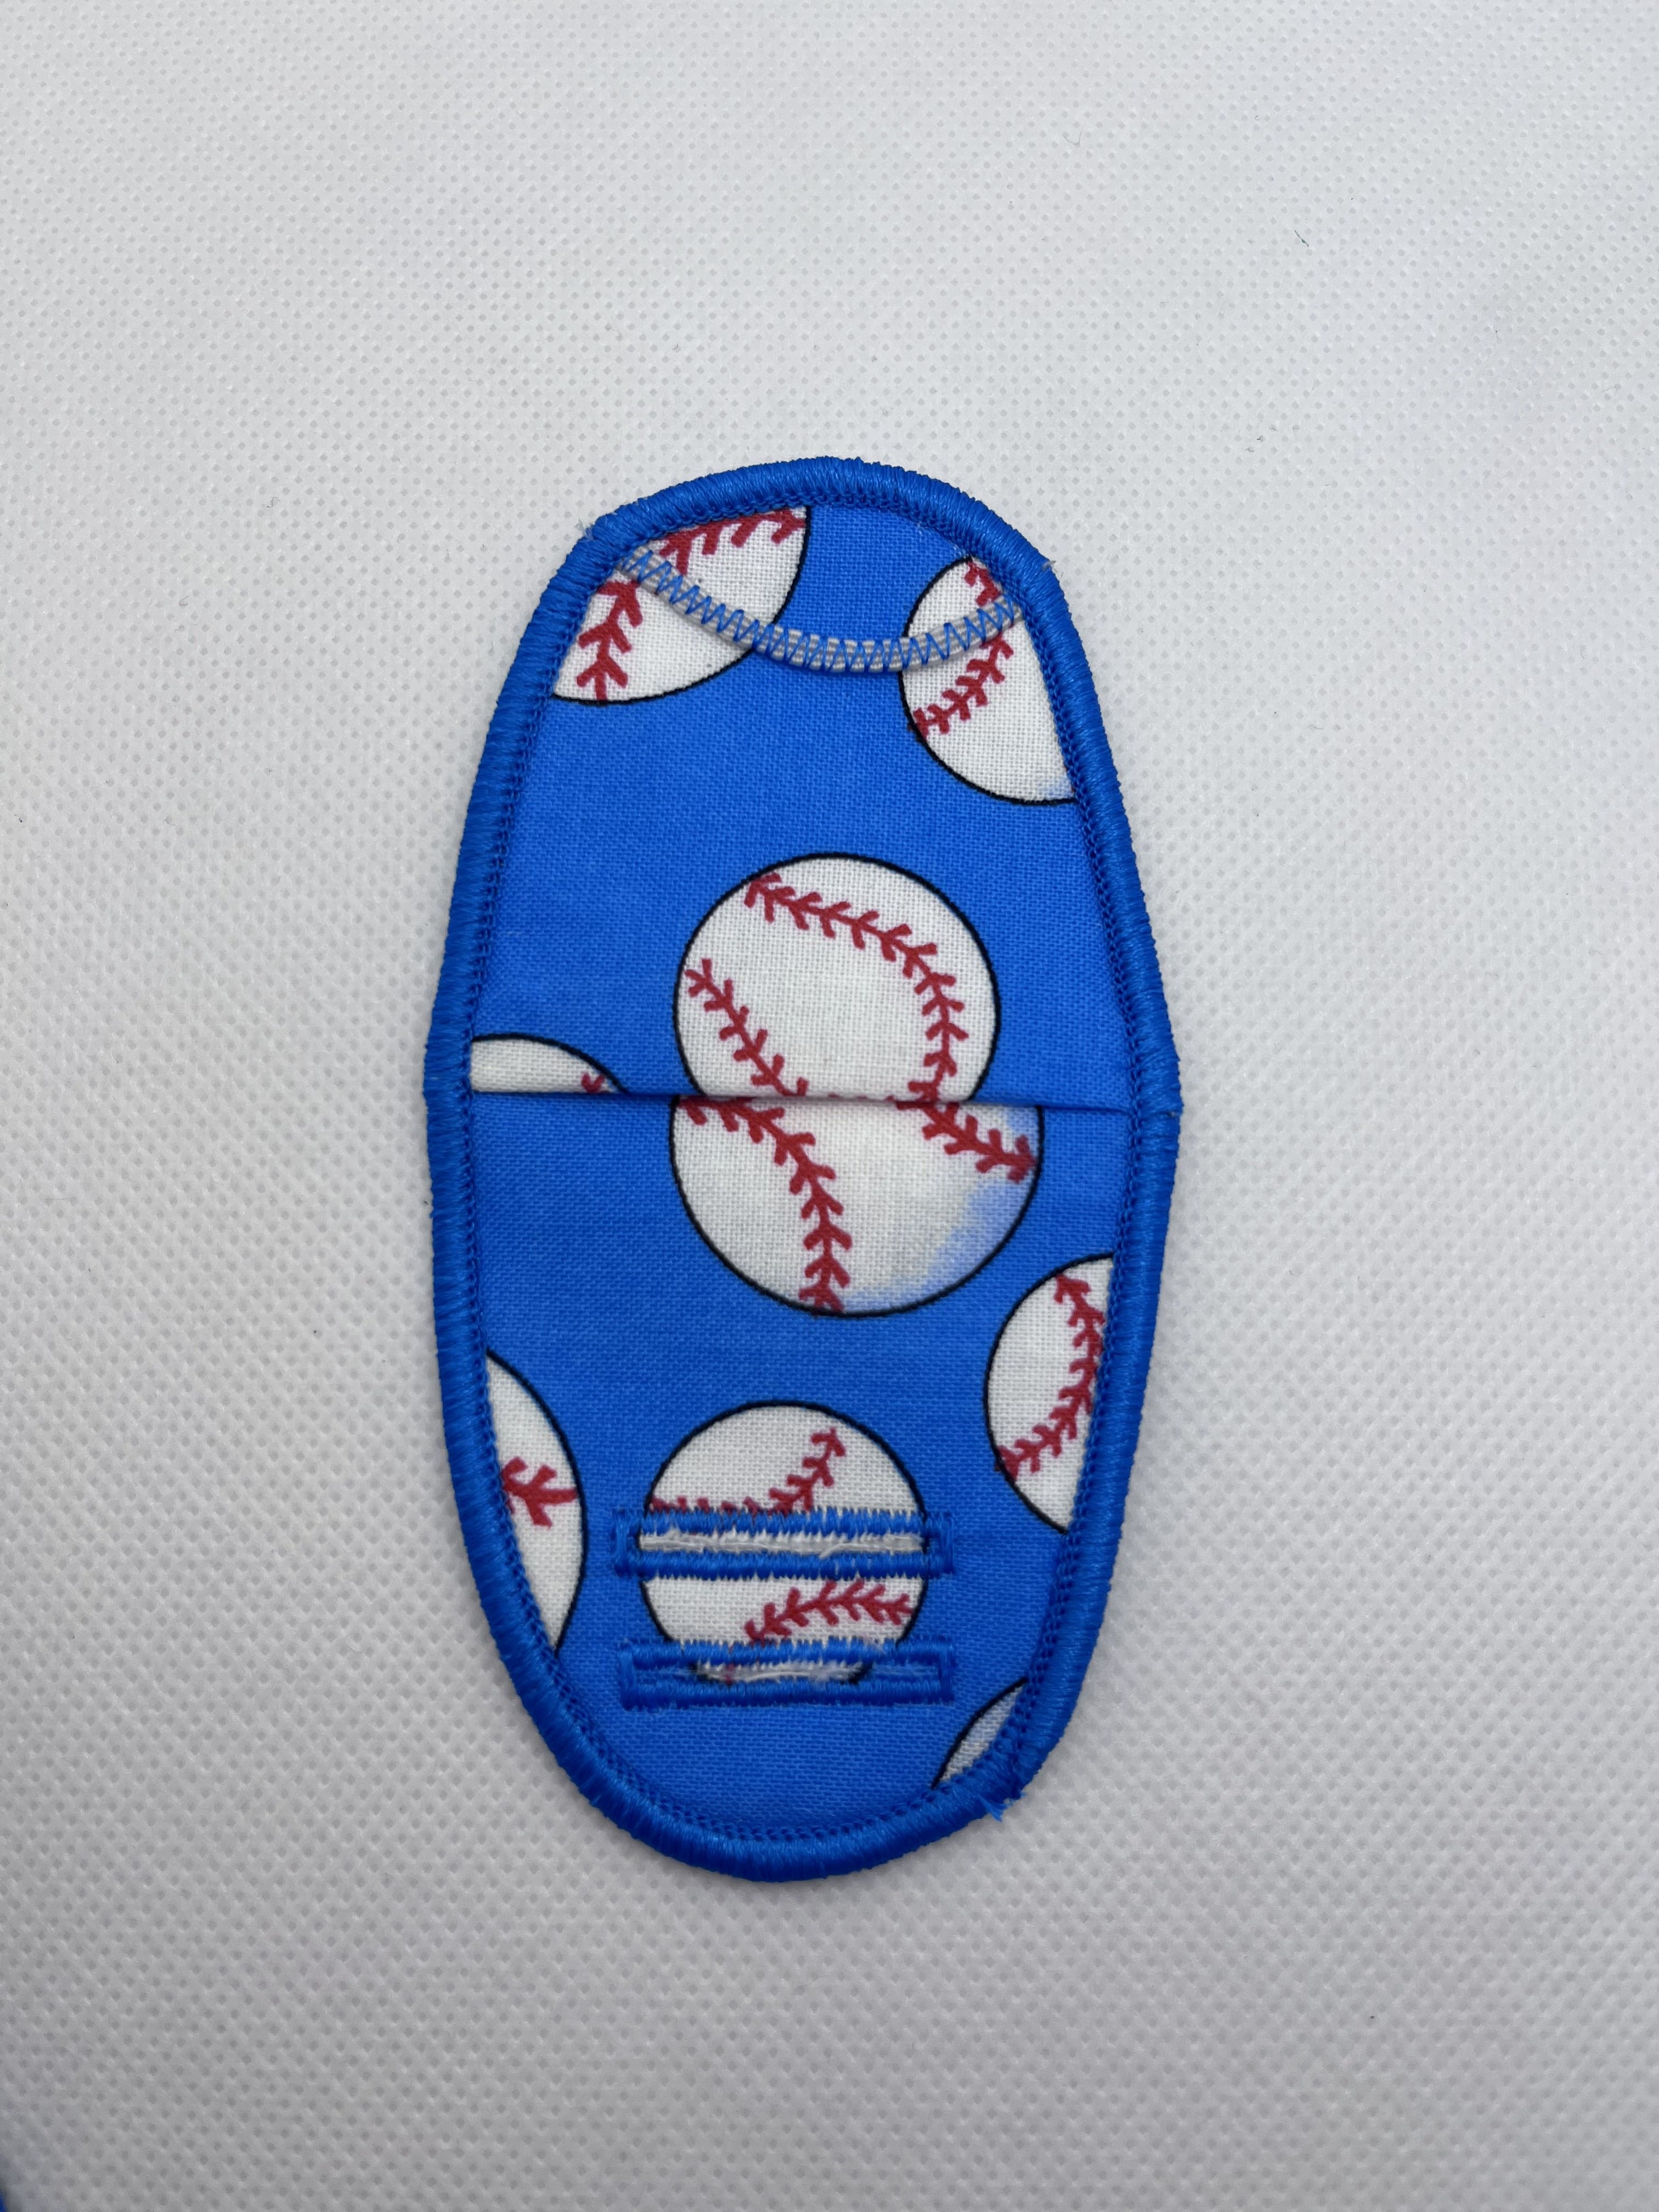 Baseballs on Blue Plastic